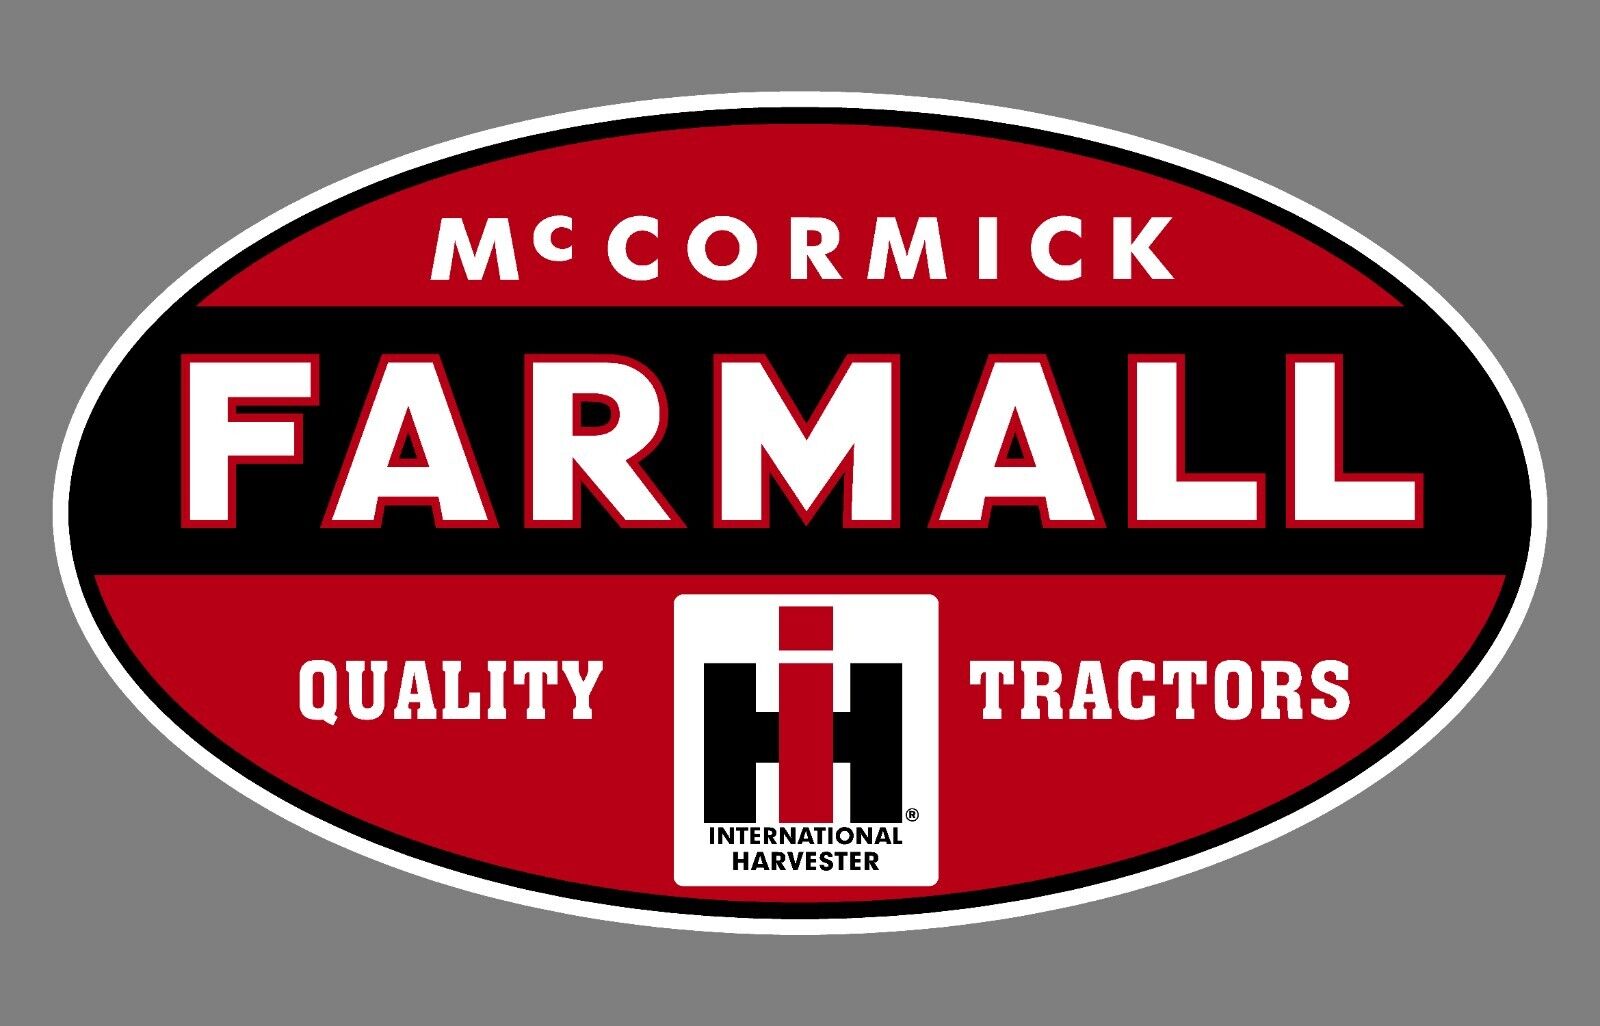 Farmall International Harvester Quality Tractor Vintage  Emblem Sticker Decal